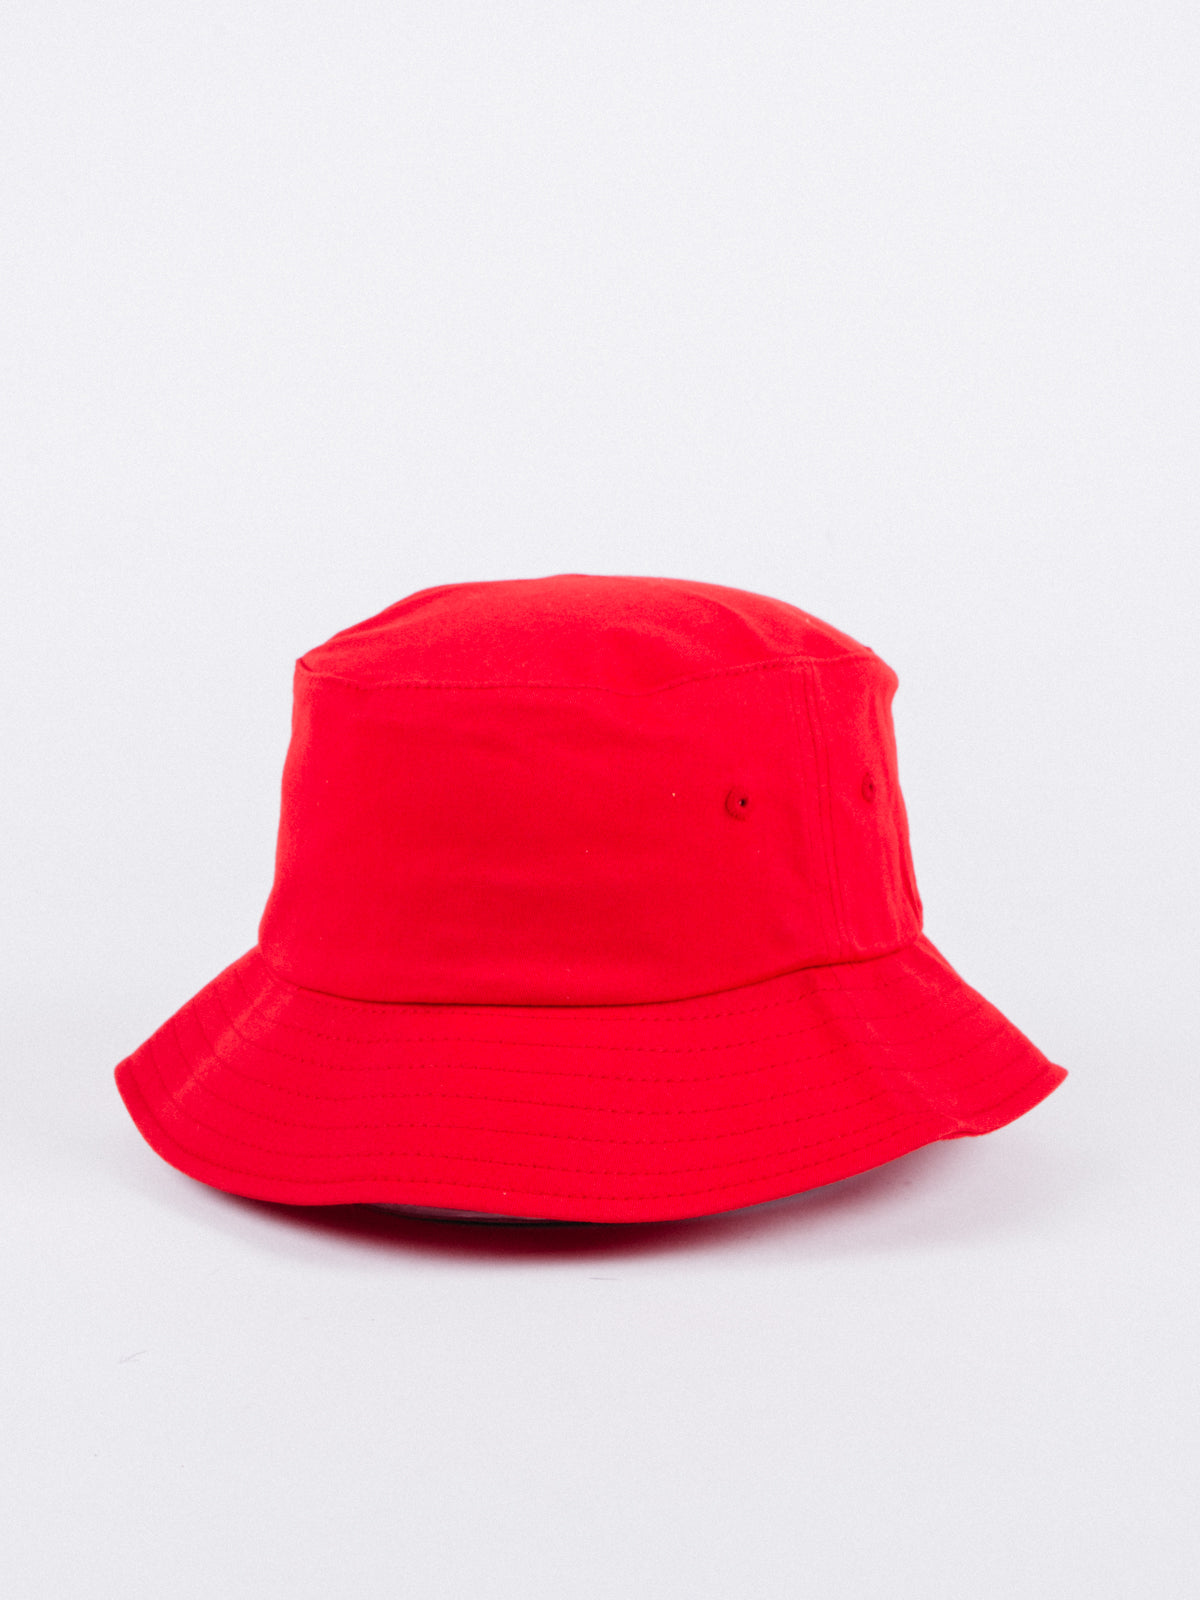 Flexfit Bucket Hat